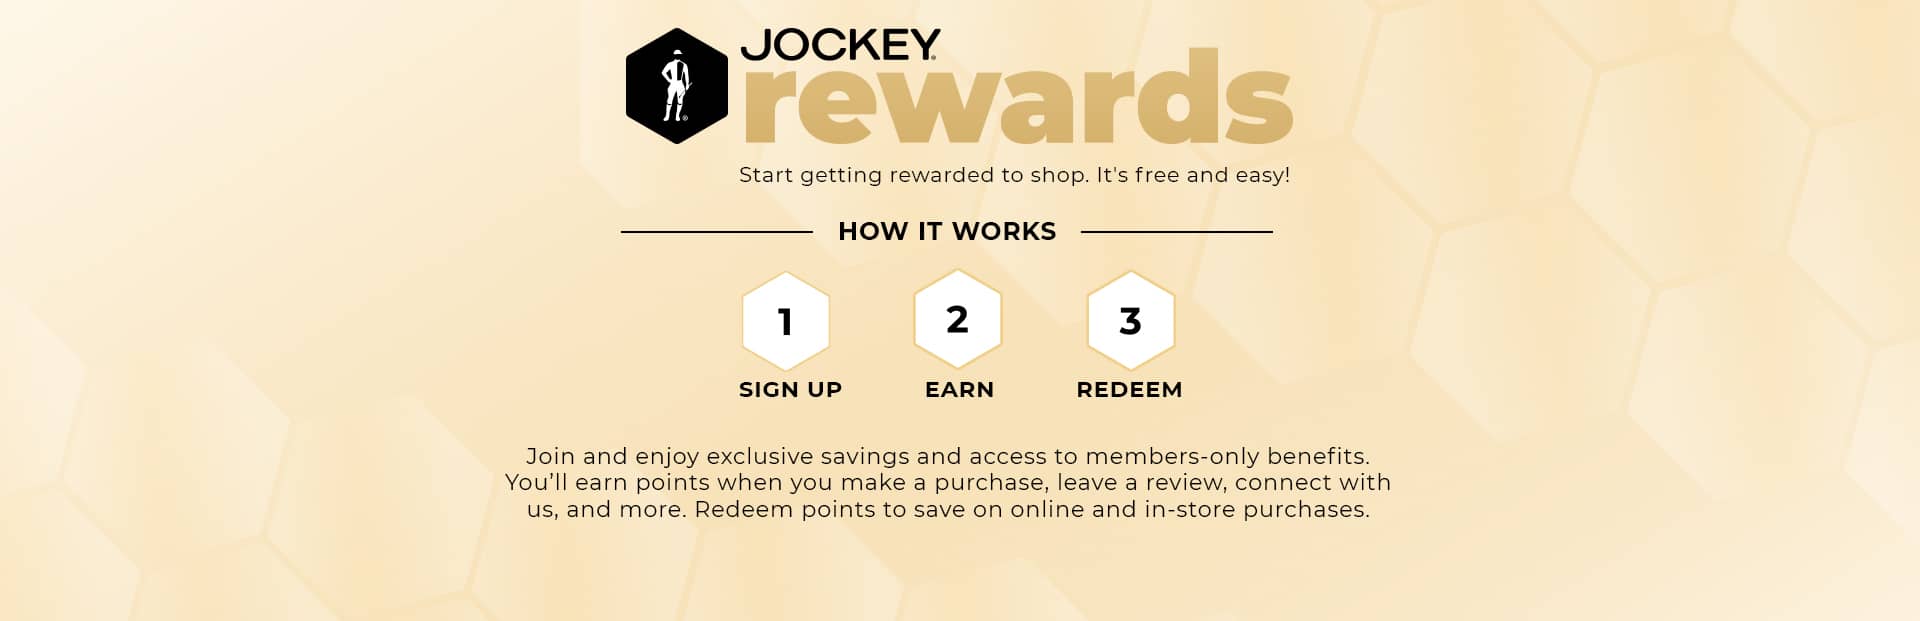 jockey rewards sign up banner